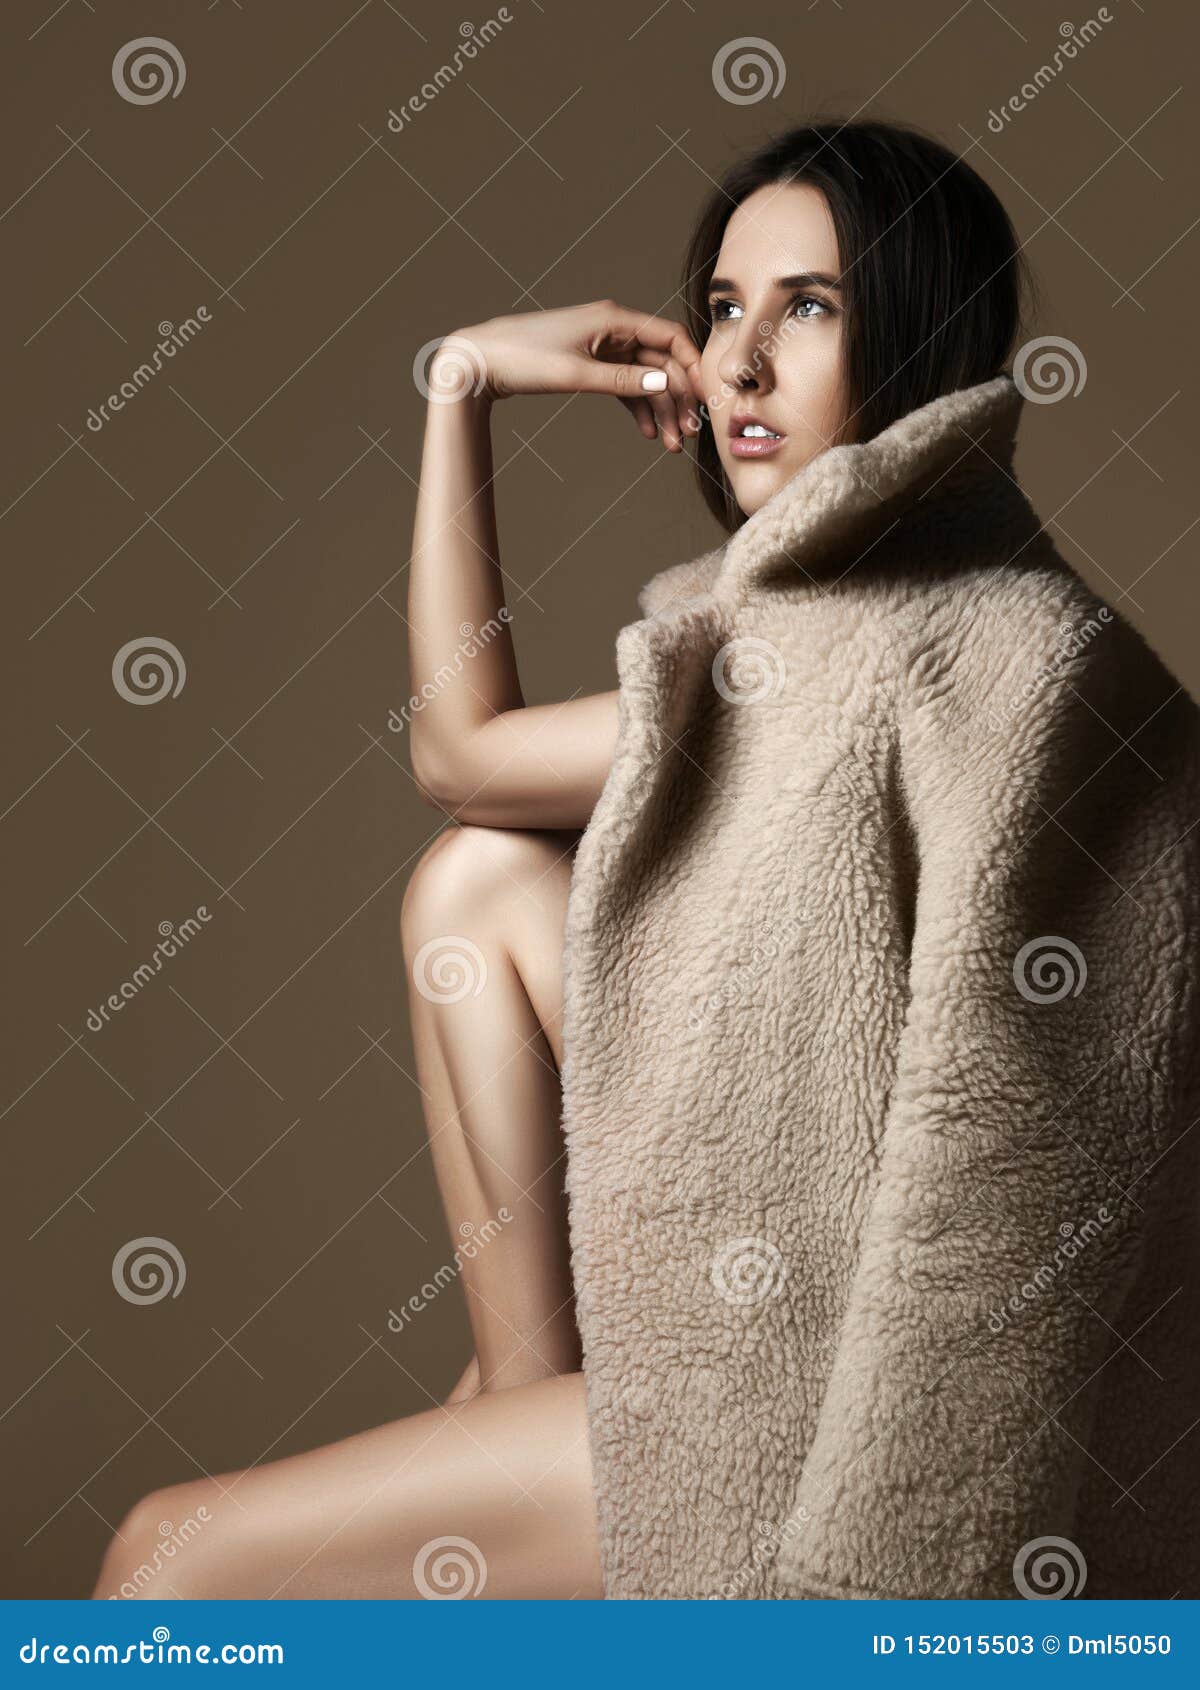 Girls Naked In Fur